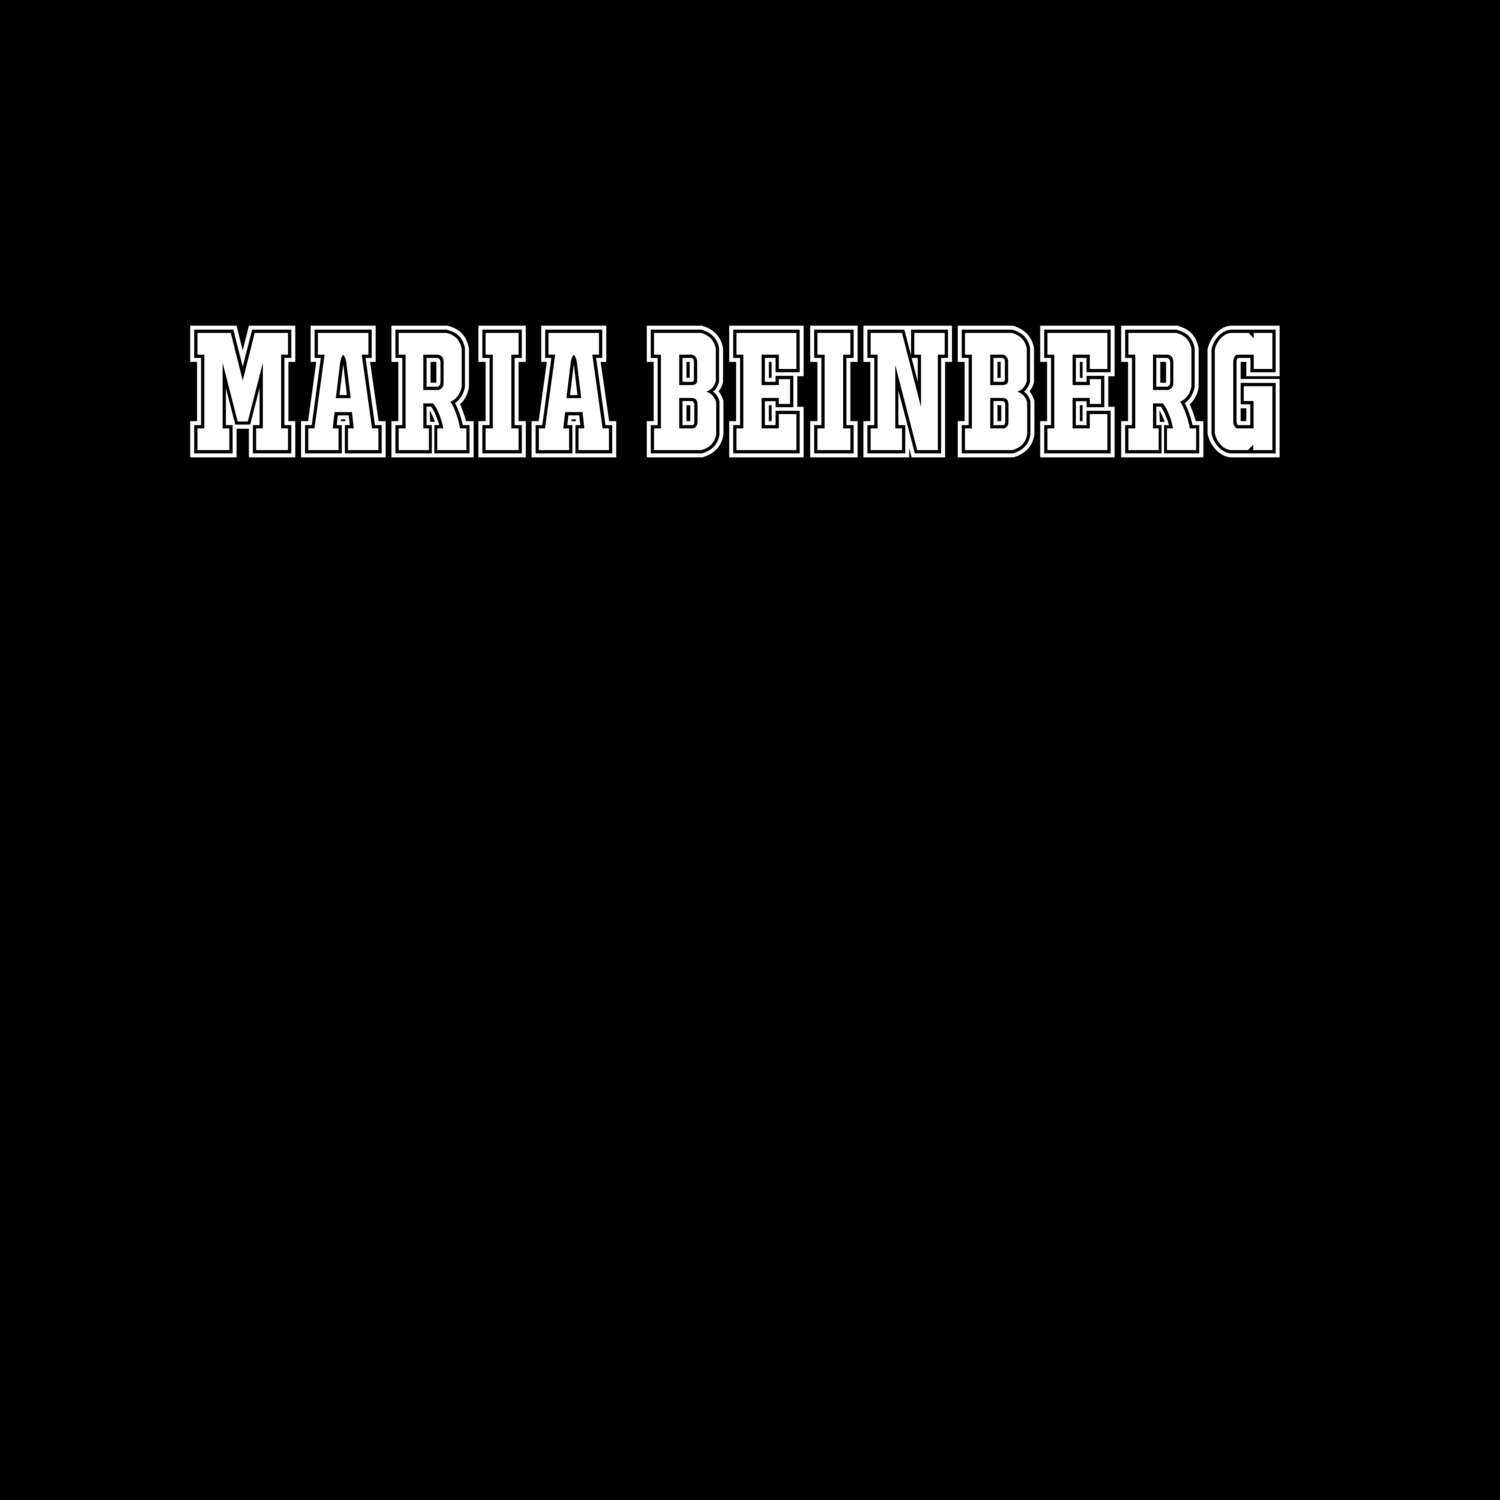 Maria Beinberg T-Shirt »Classic«